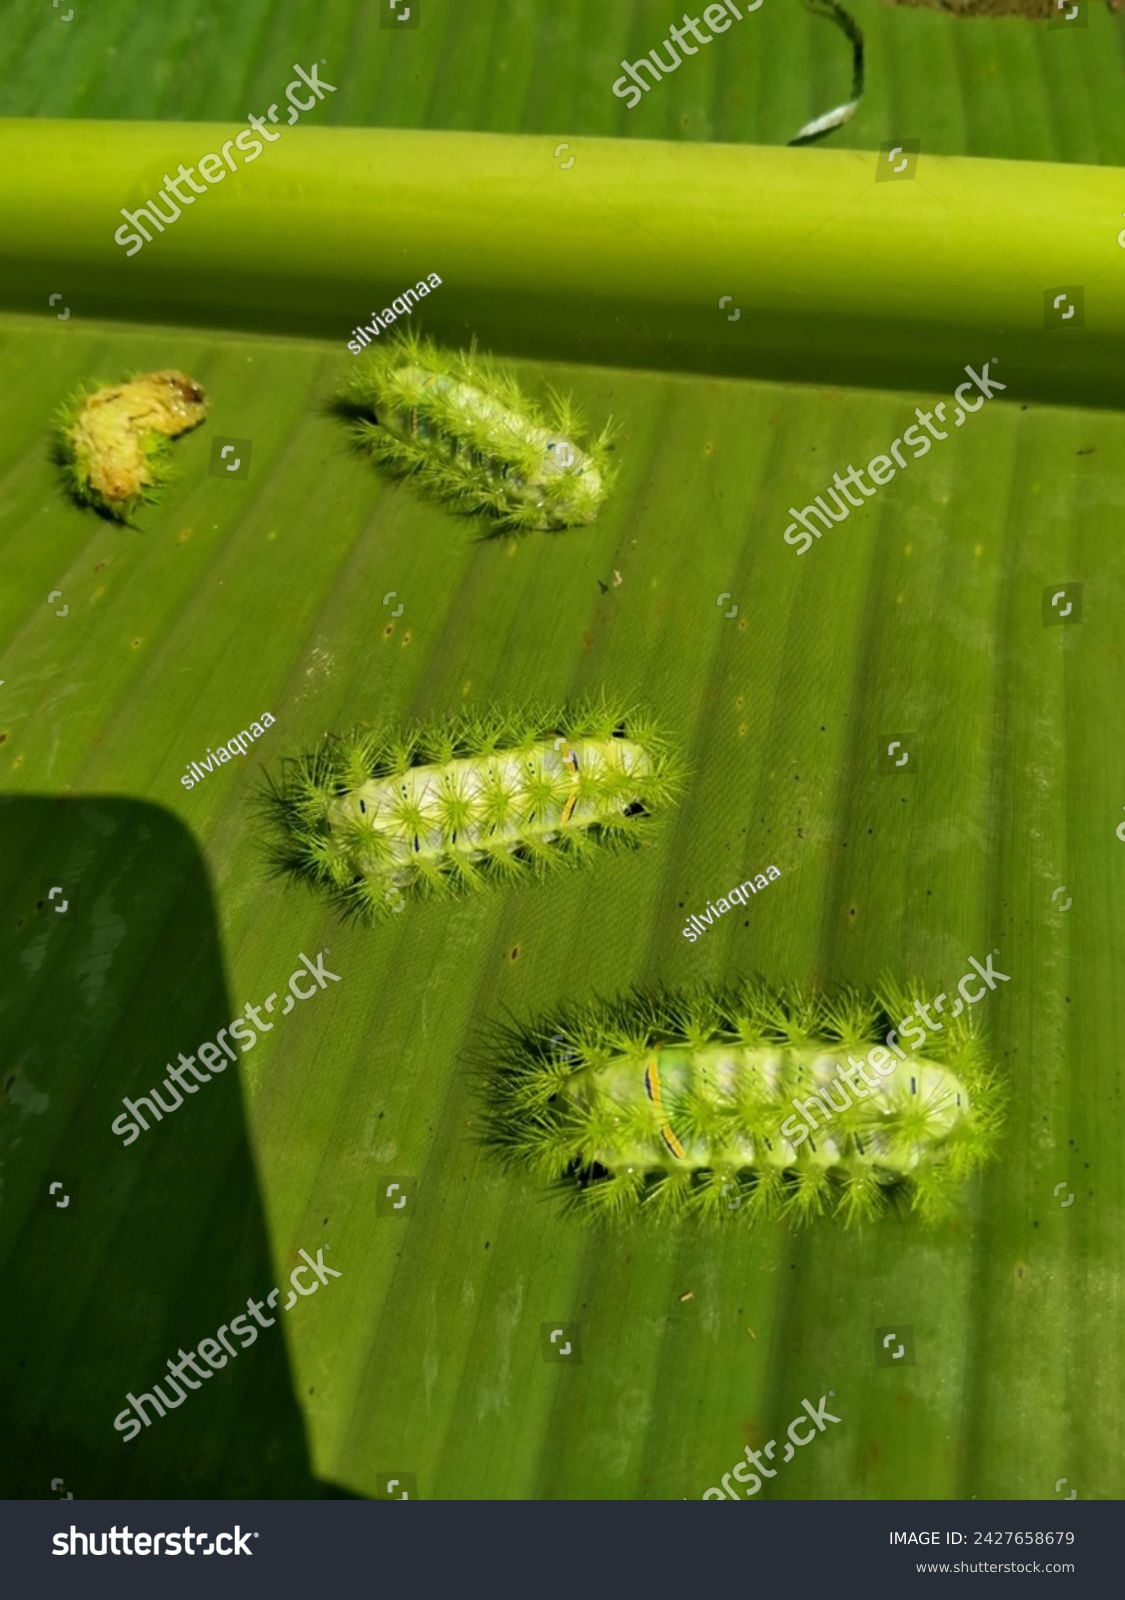 Green caterpillars on banana leaves #2427658679